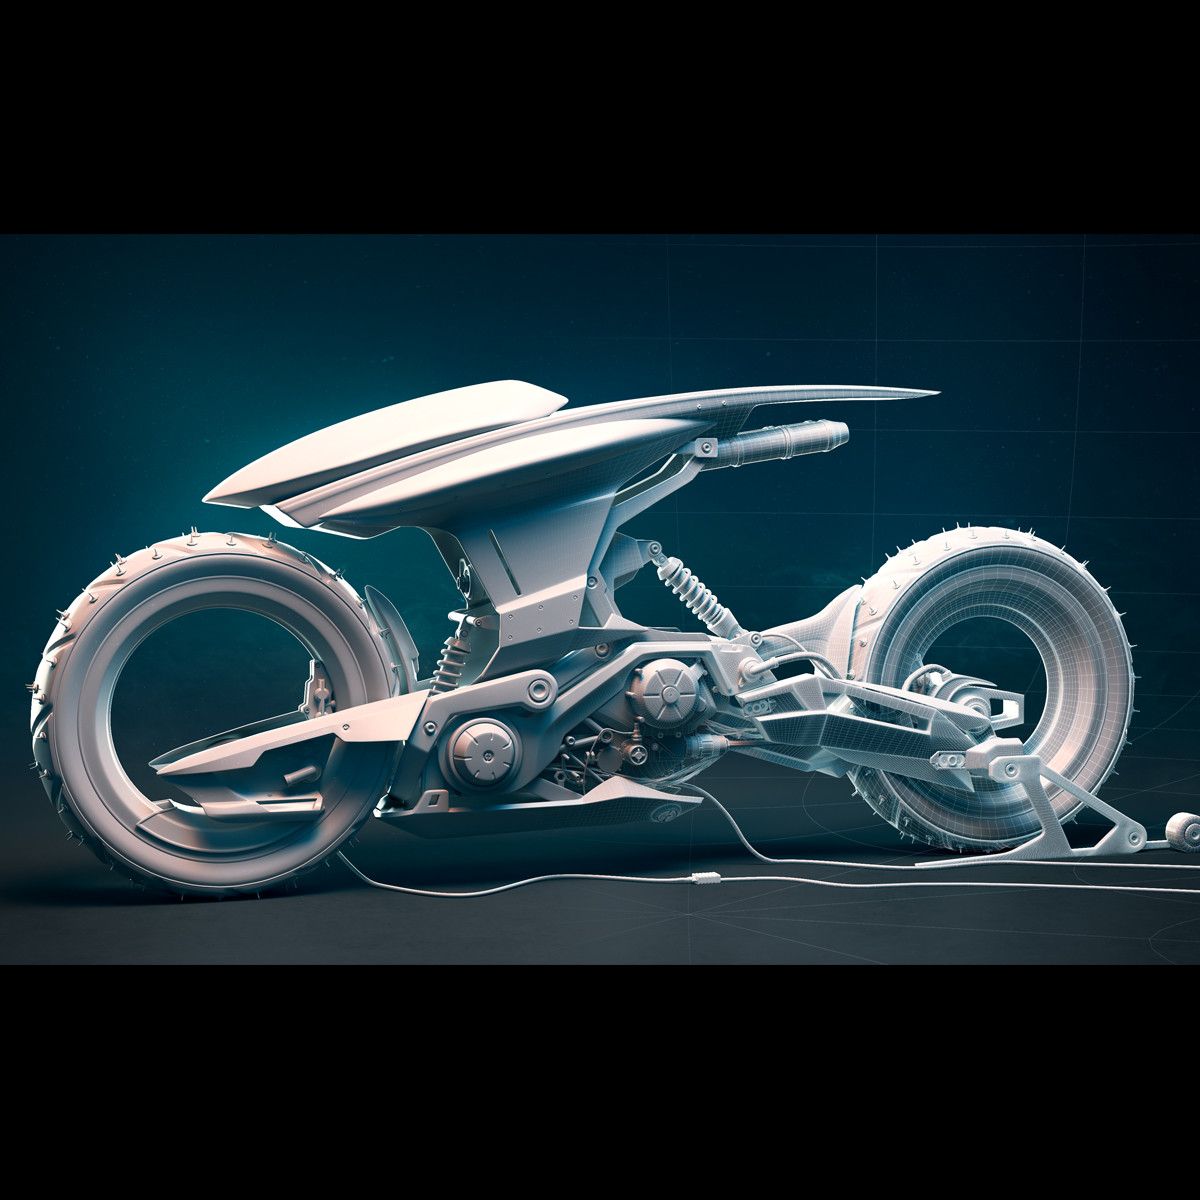 Sci-Fi Motorcycle, Stefan V